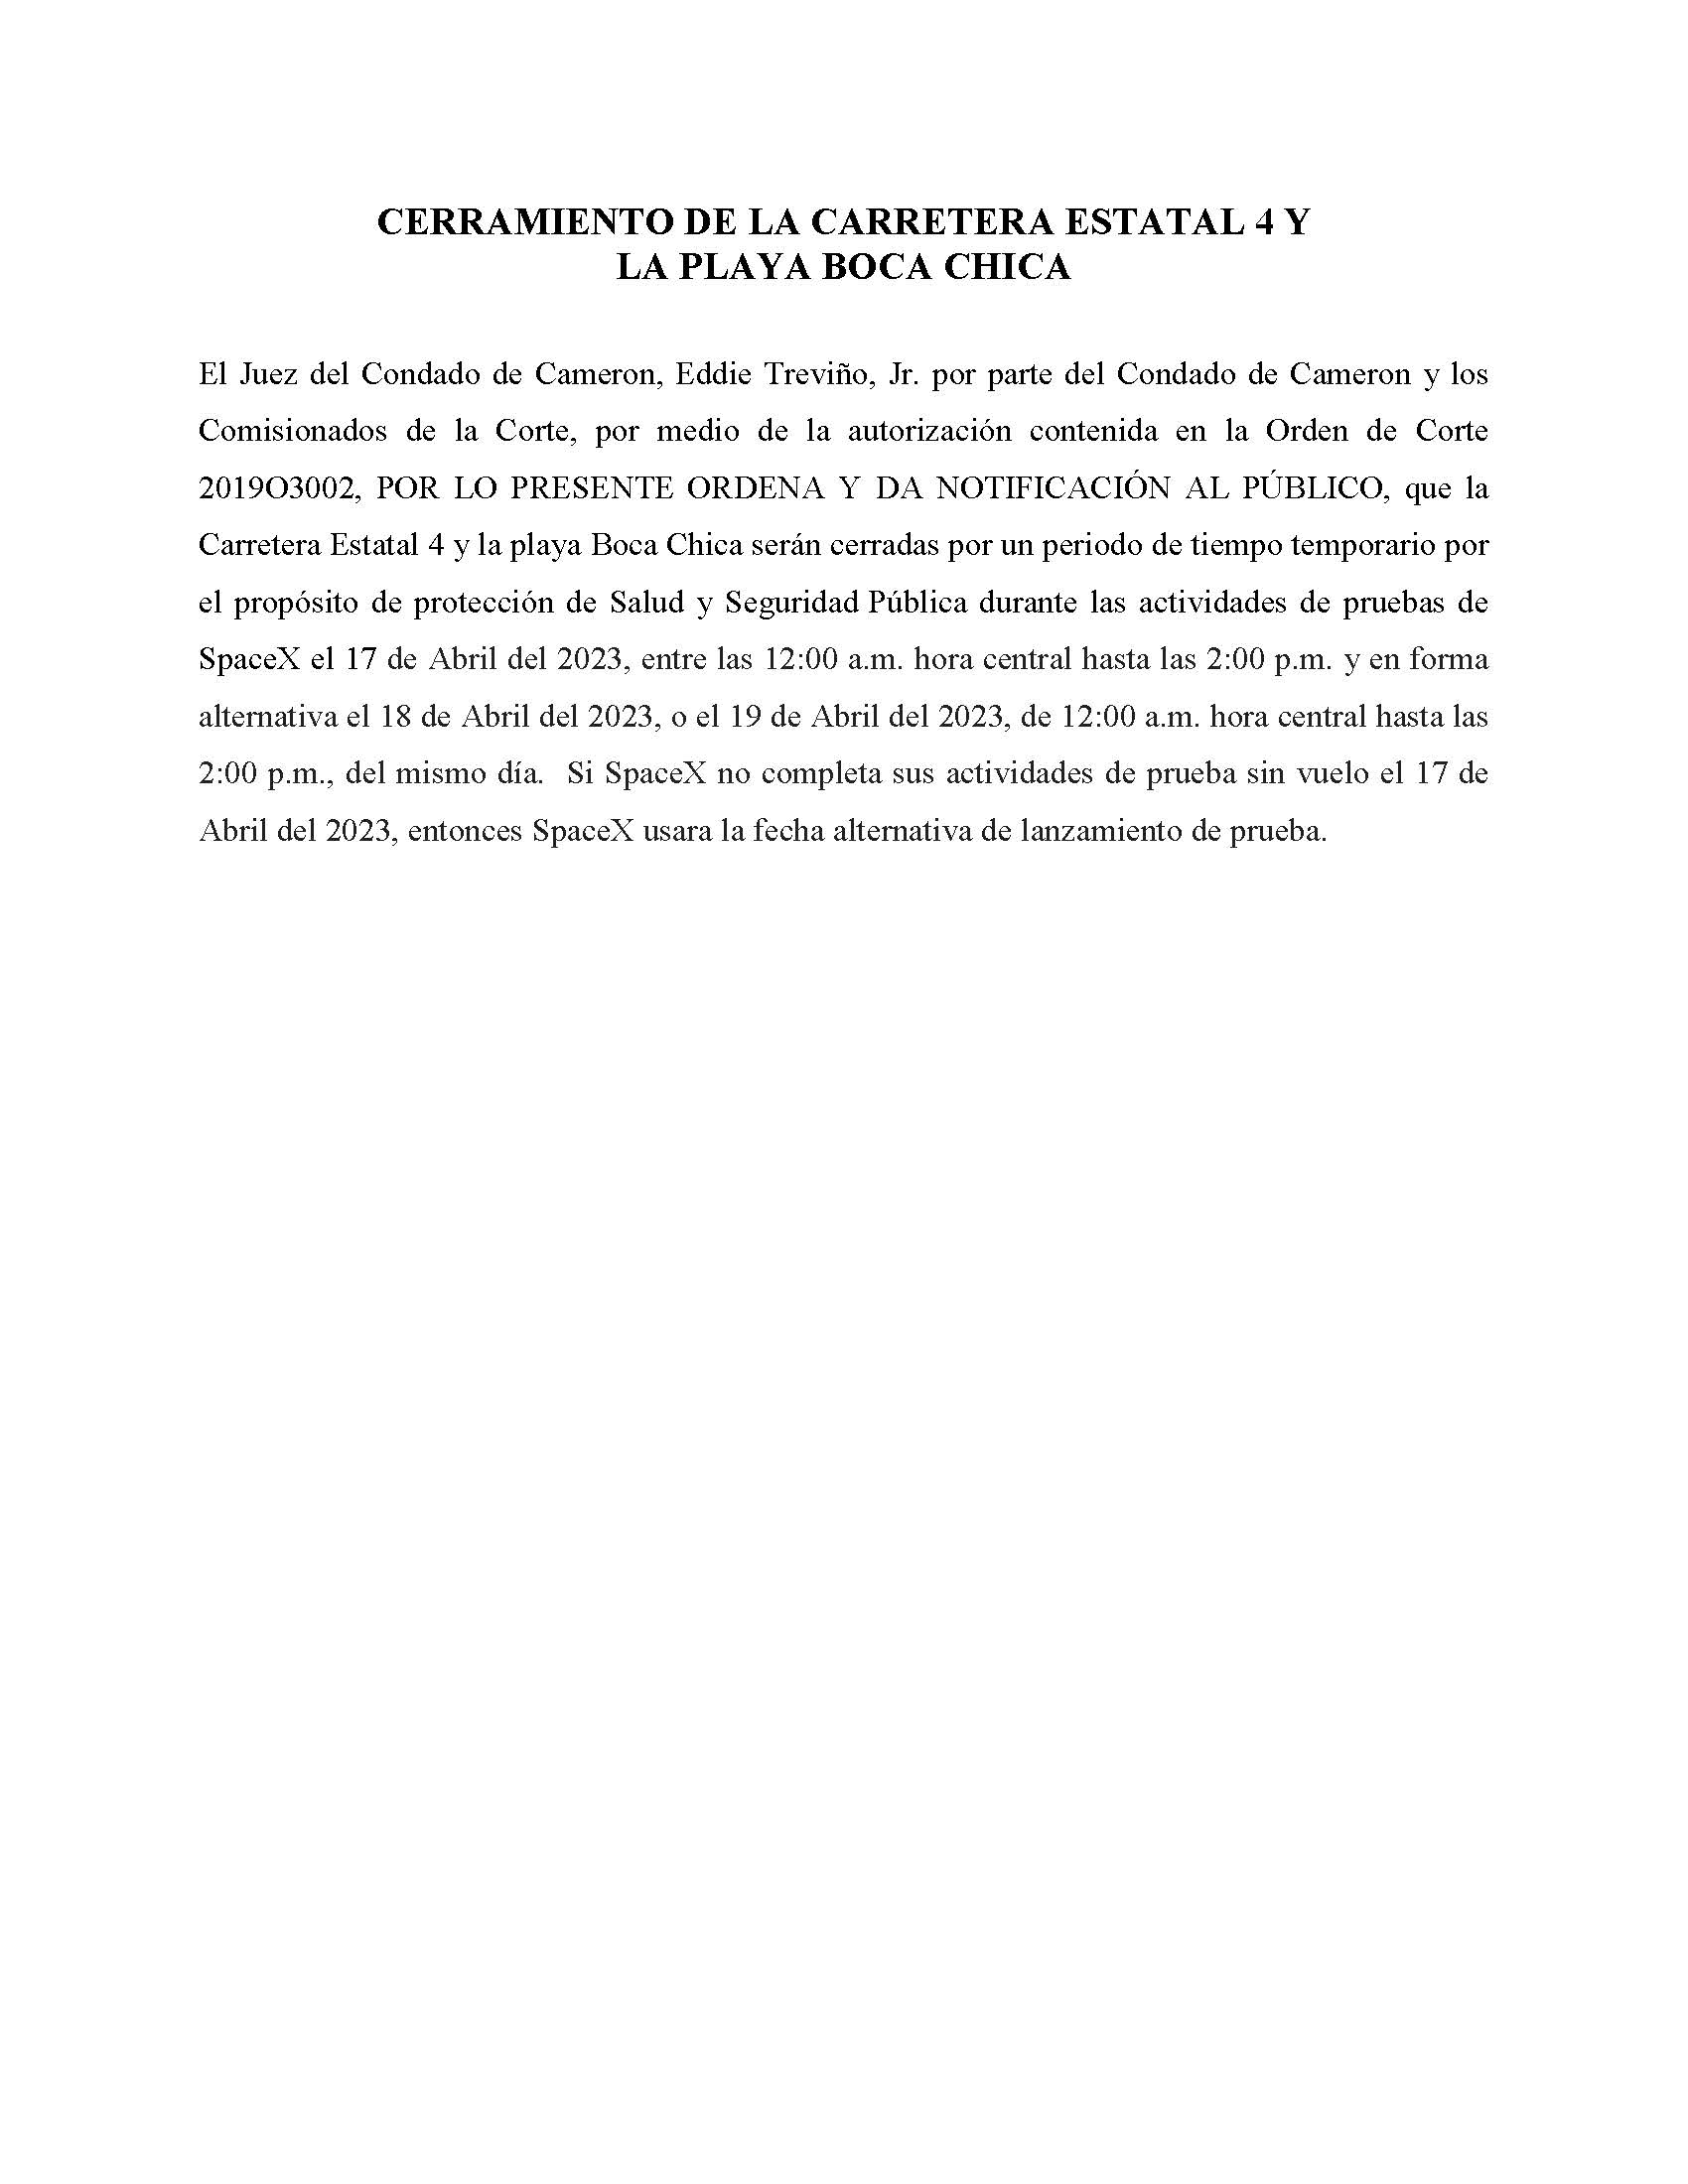 ORDER.CLOSURE OF HIGHWAY 4 Y LA PLAYA BOCA CHICA.SPANISH.04.17.23 002